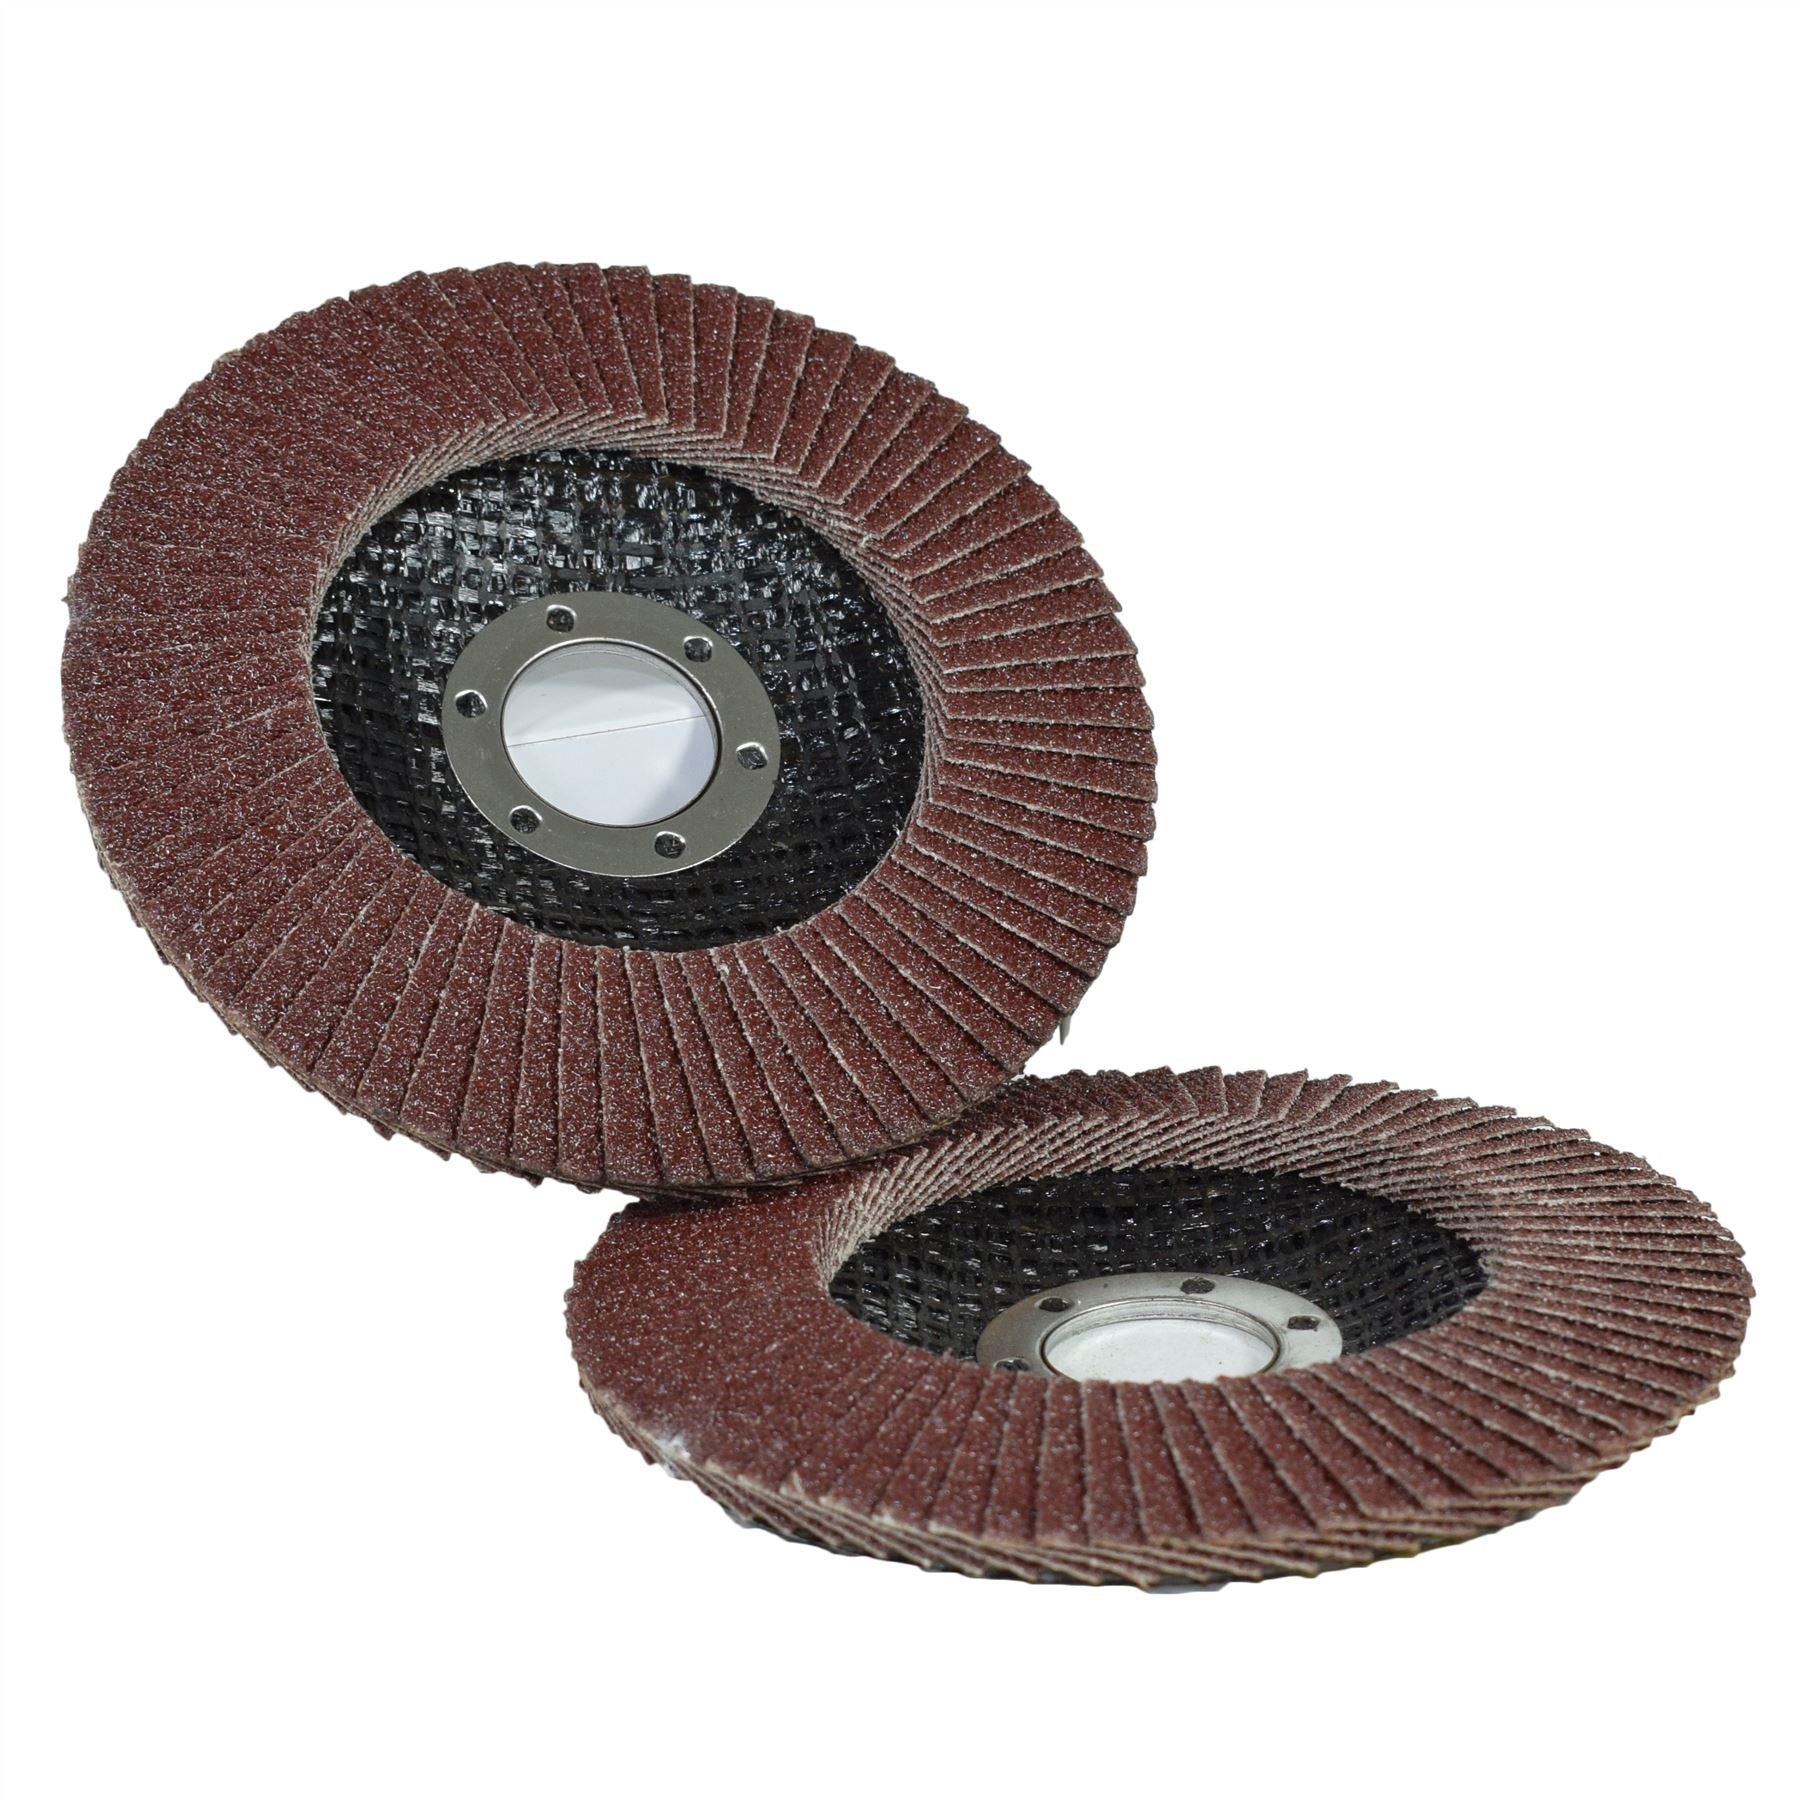 2 x 60 Grit Flap Discs Sanding Grinding Rust Removing For 4-1/2" (115mm) Grinder